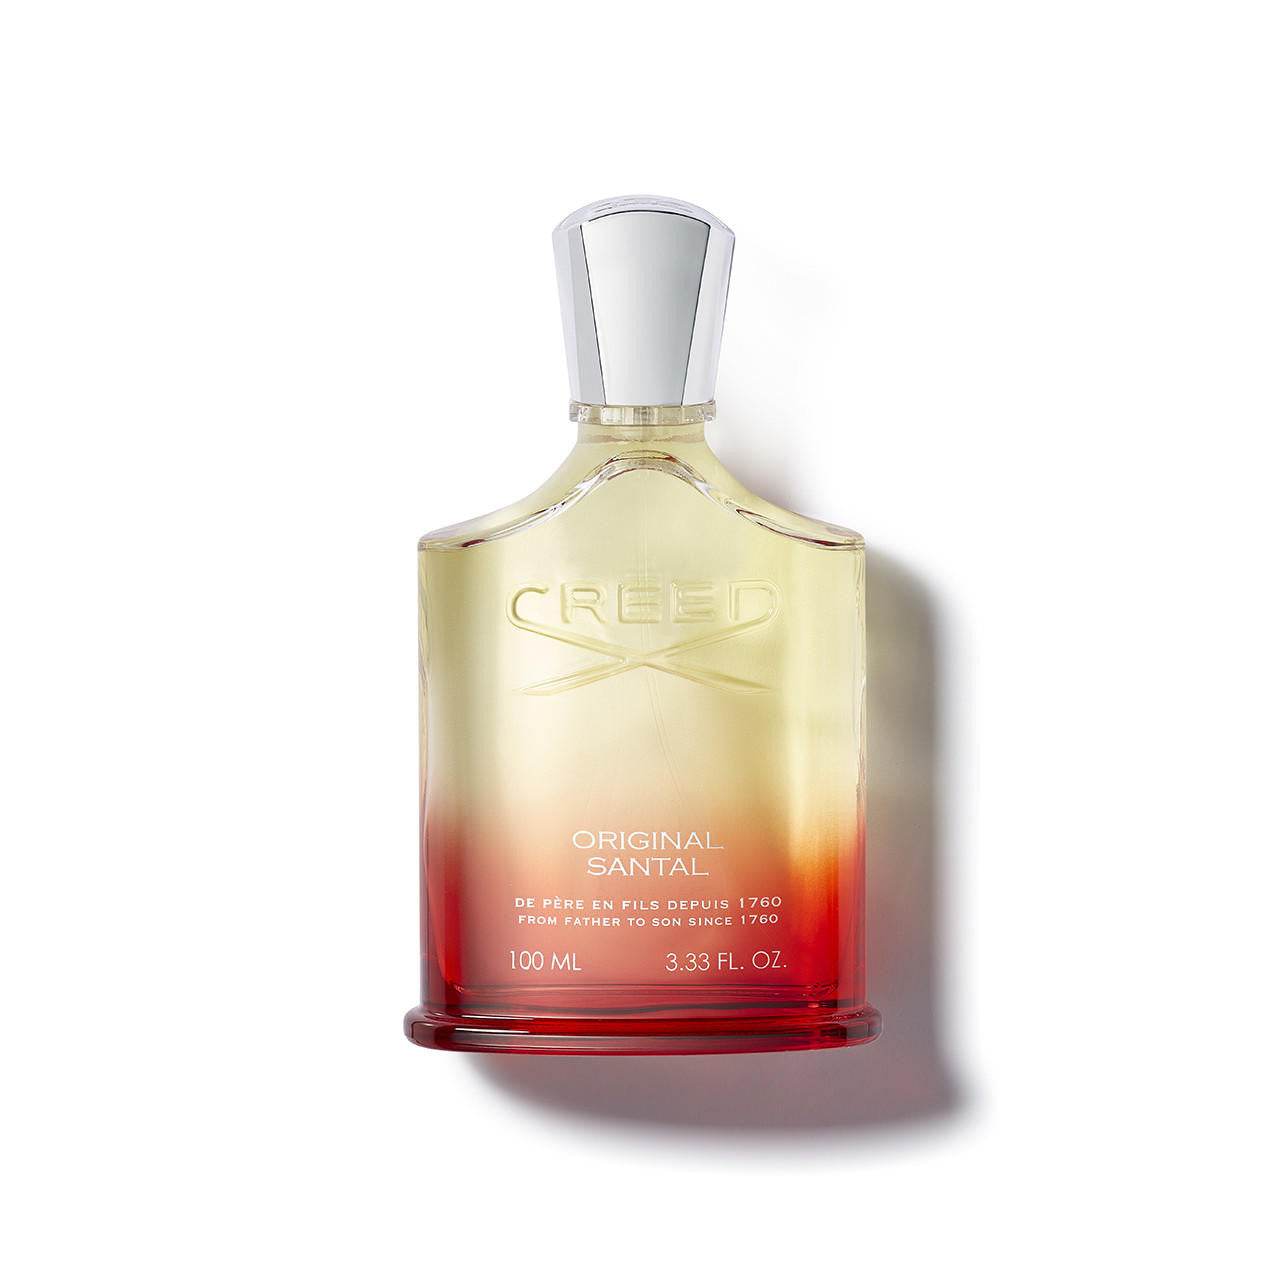  Creed Original Santal Eau de Parfum 